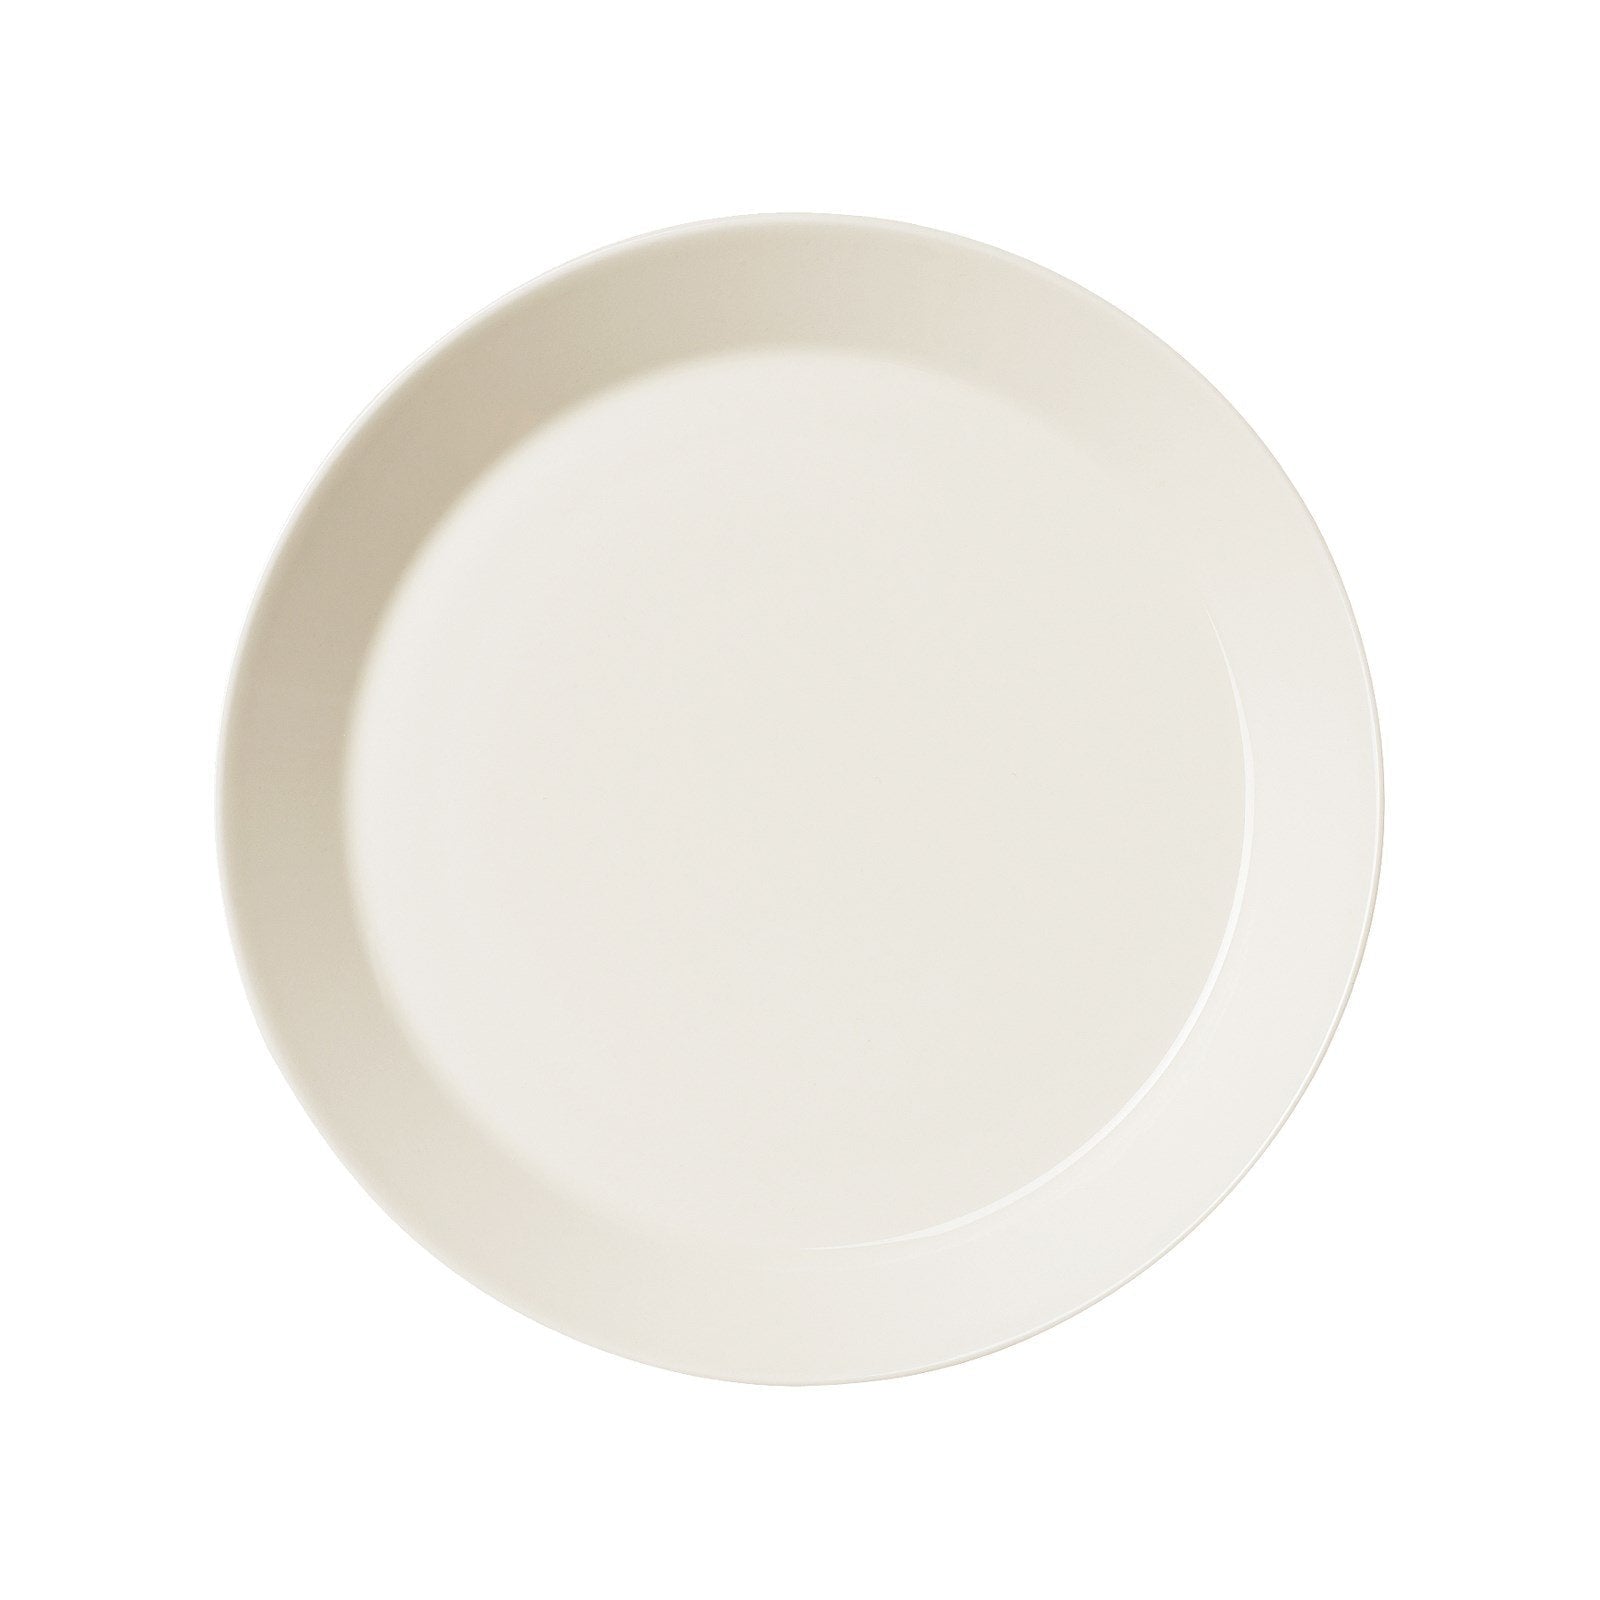 Iittala Teema Plate Flat White, 26cm